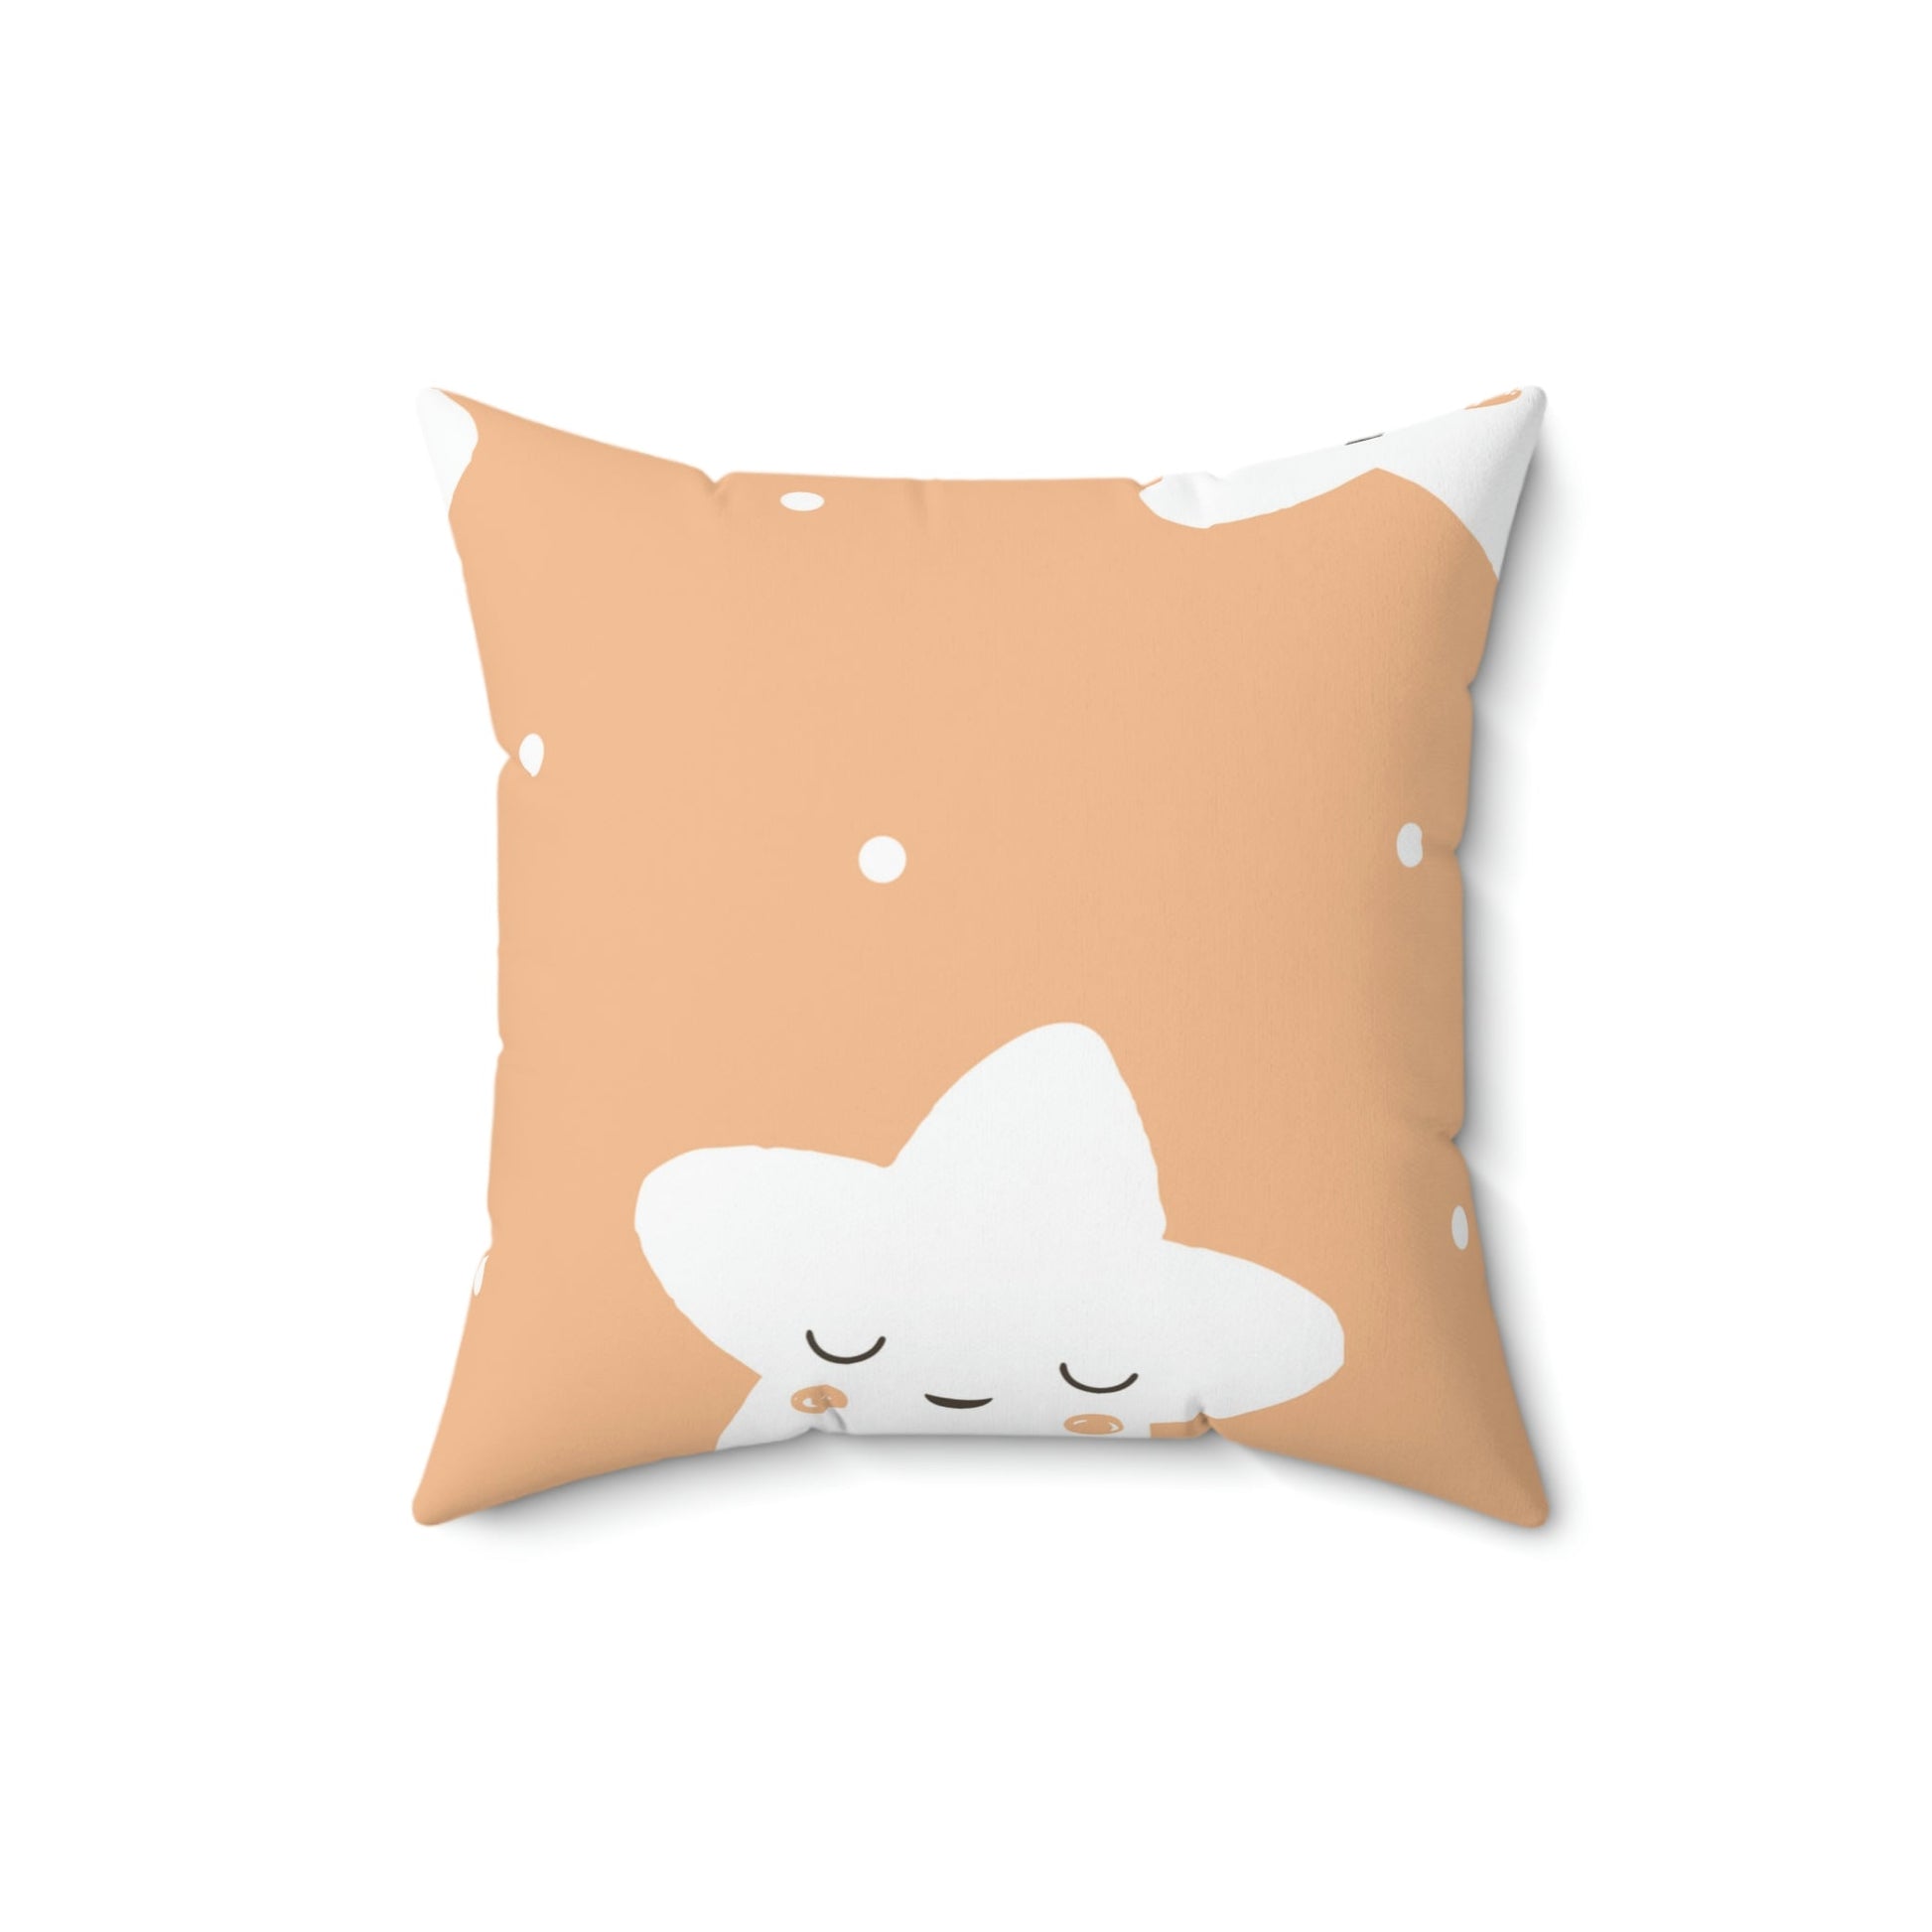 Sleepy Baby Star Peach Tangerine Square Pillow Home Decor Pink Sweetheart